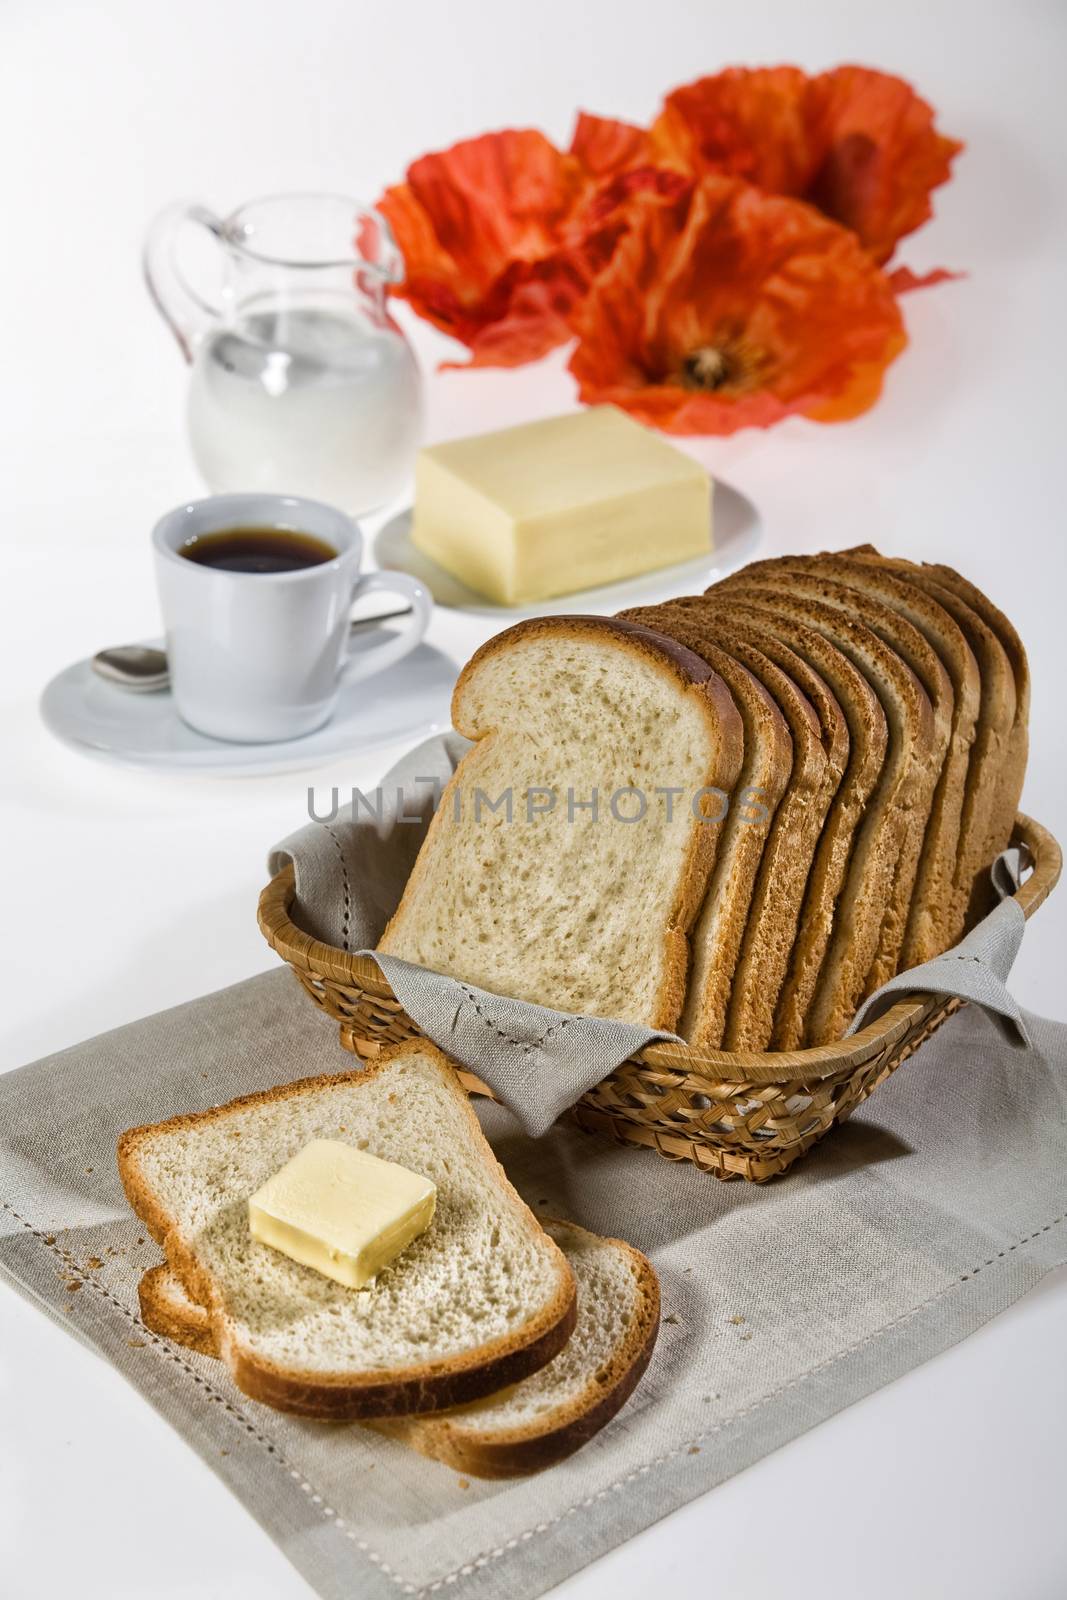 Bread, glass of milk and poppy